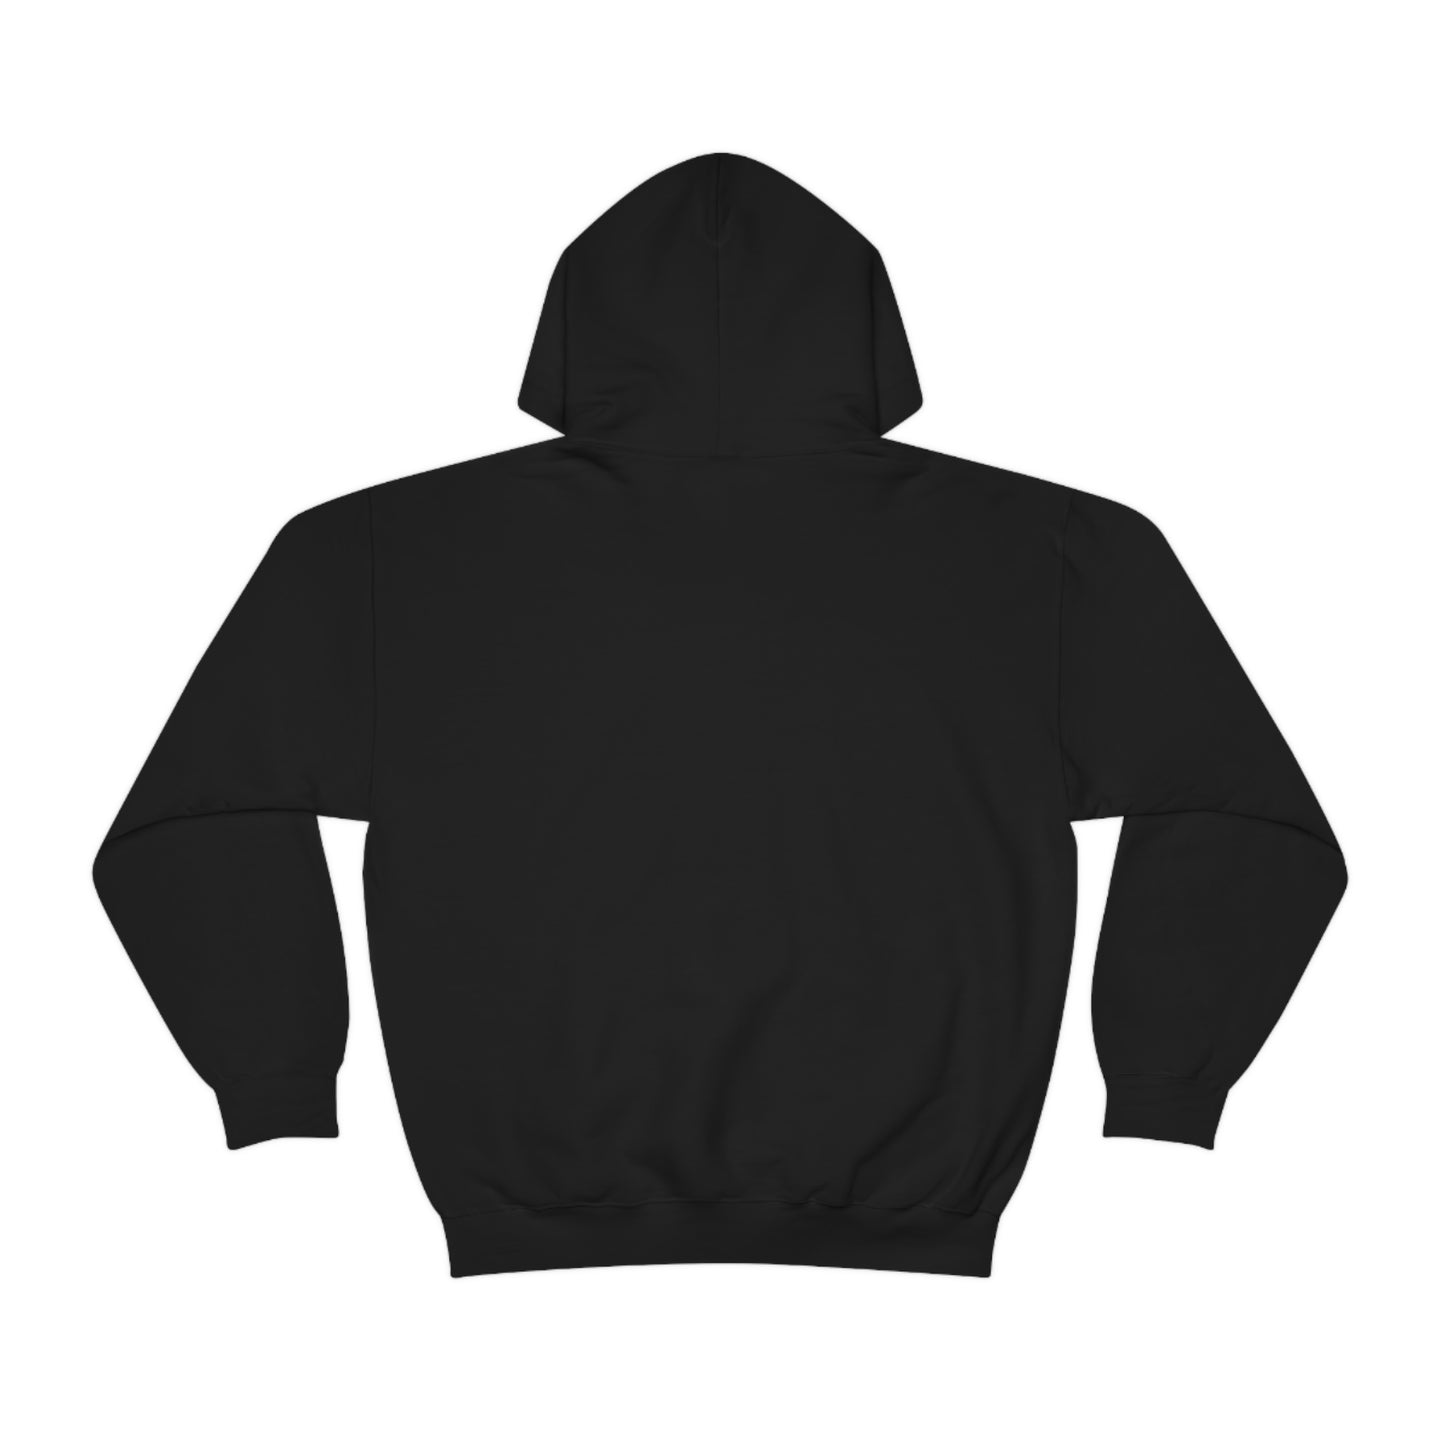 Give respect- Heavy Blend™ Hooded Sweatshirt